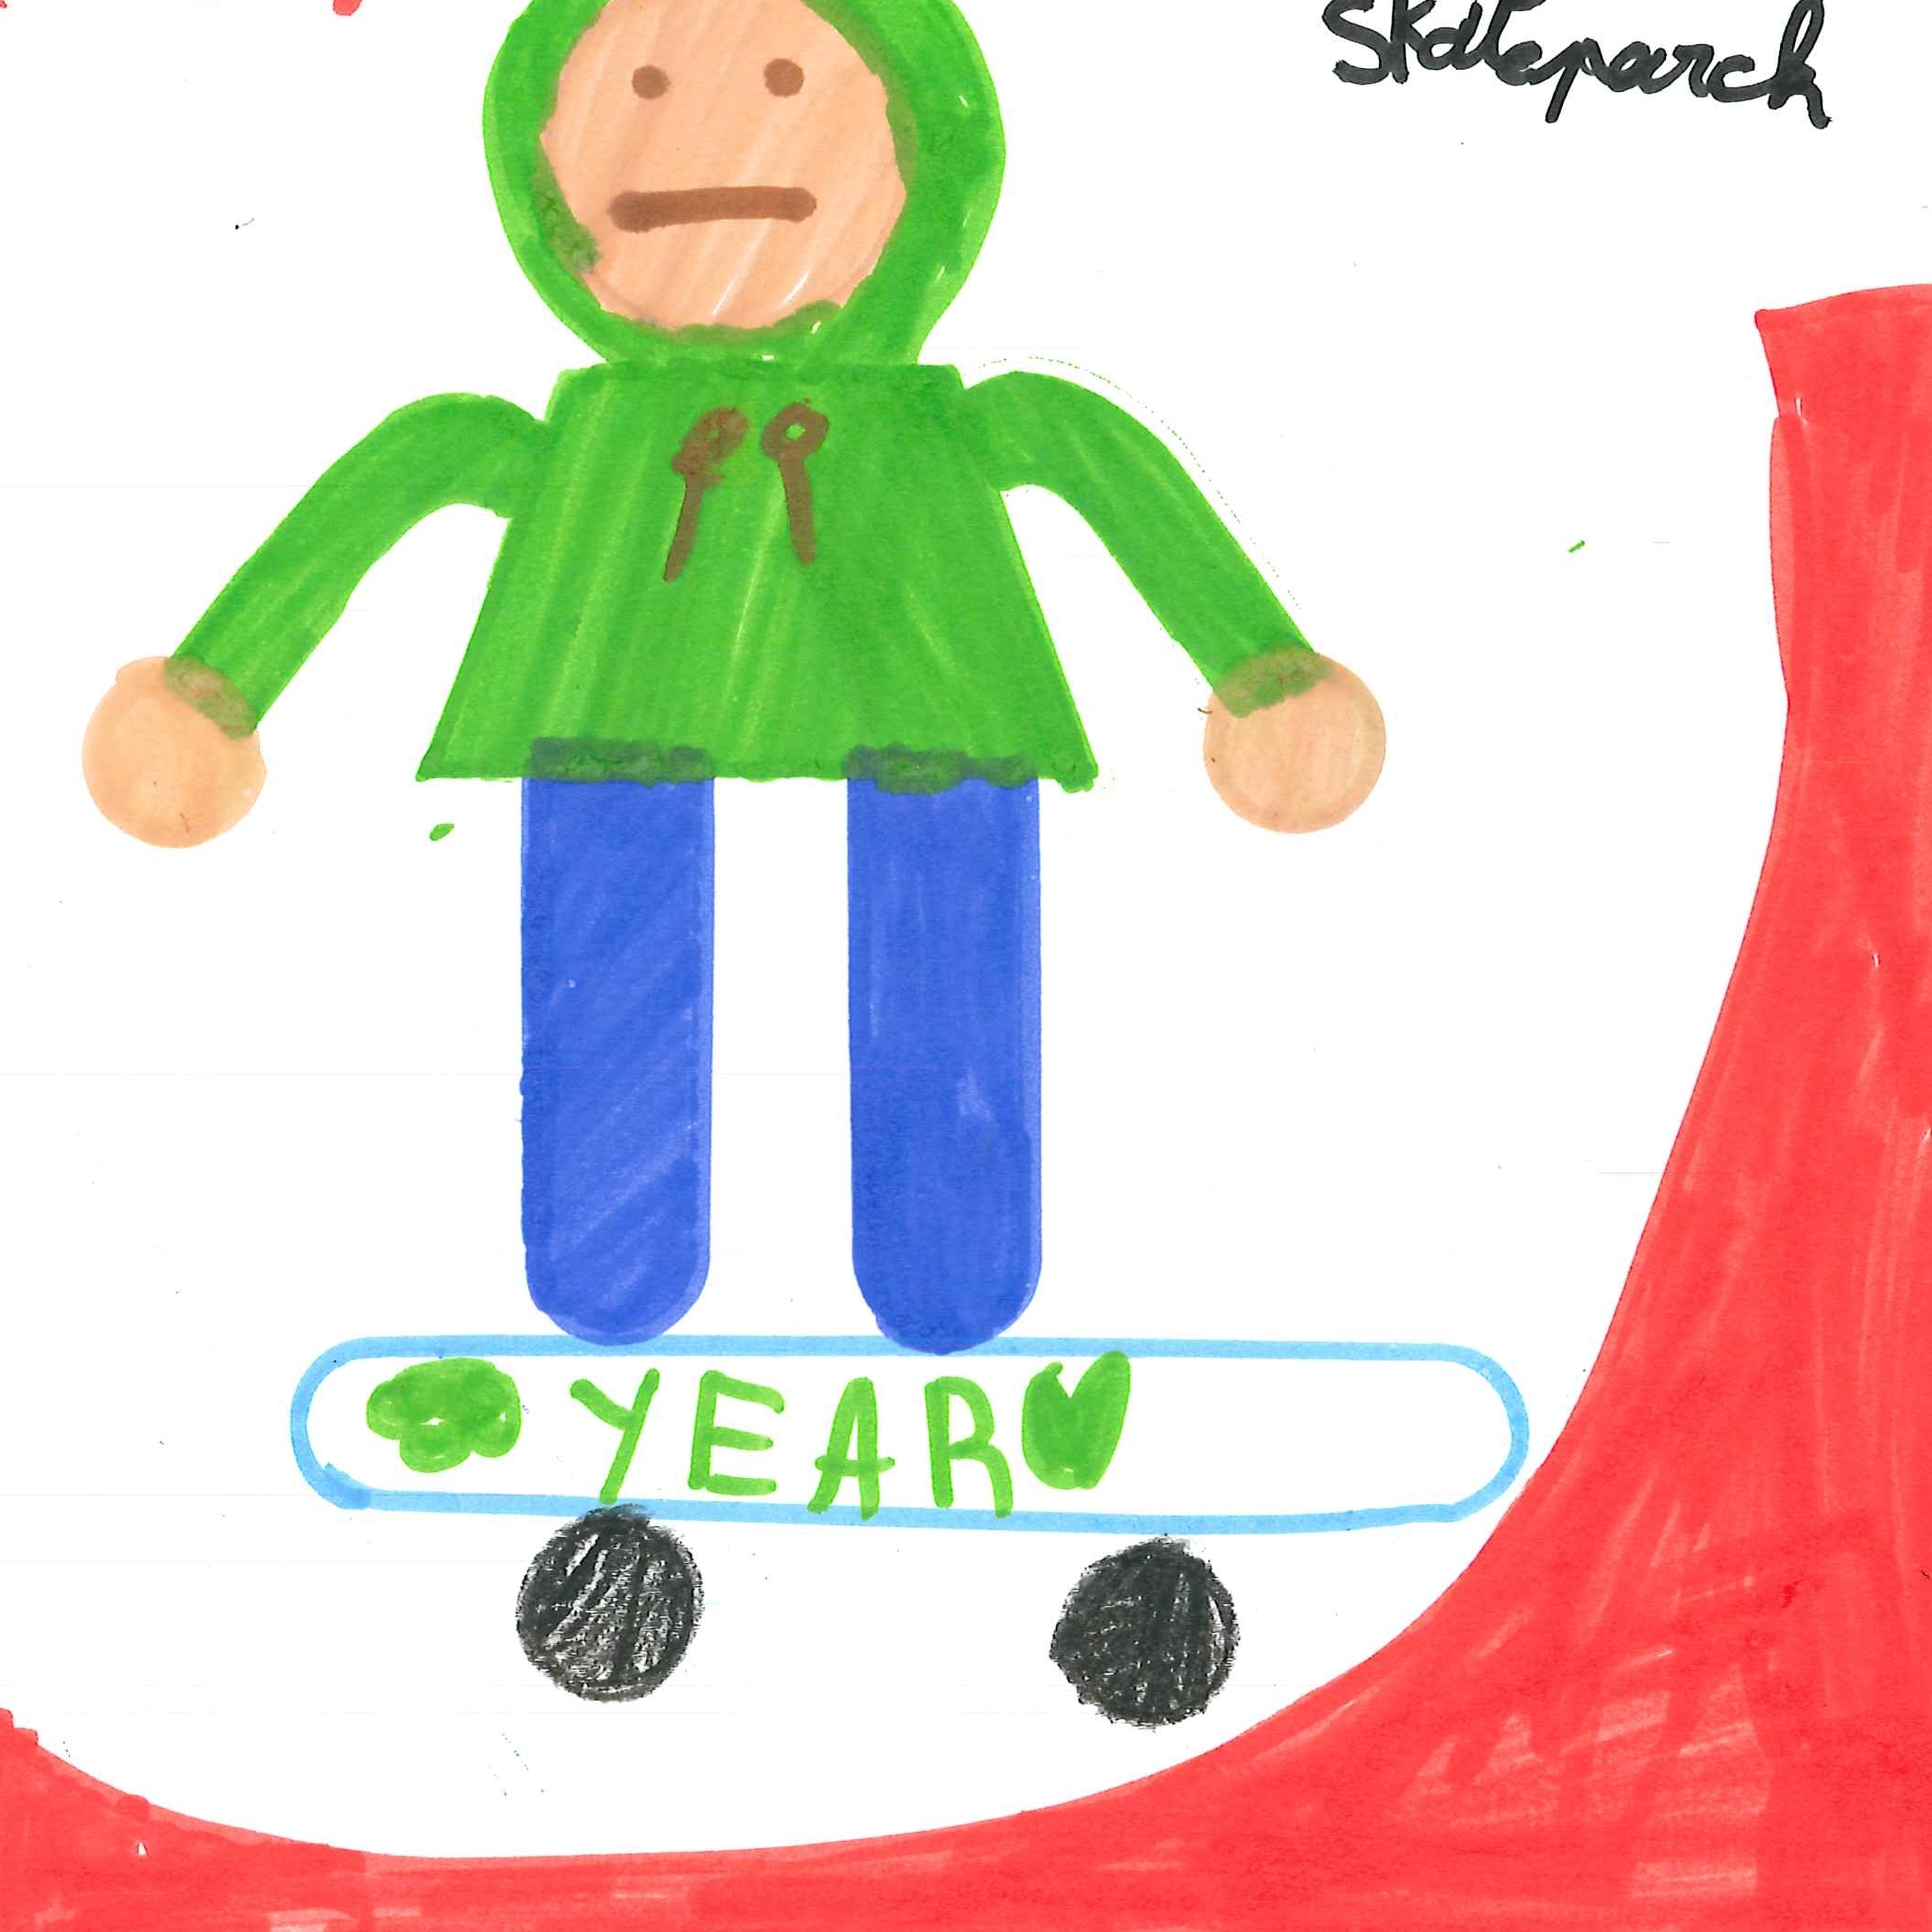 Dessin de Bochra (11 ans). Mot: Skate, SkateparkTechnique: Crayons.